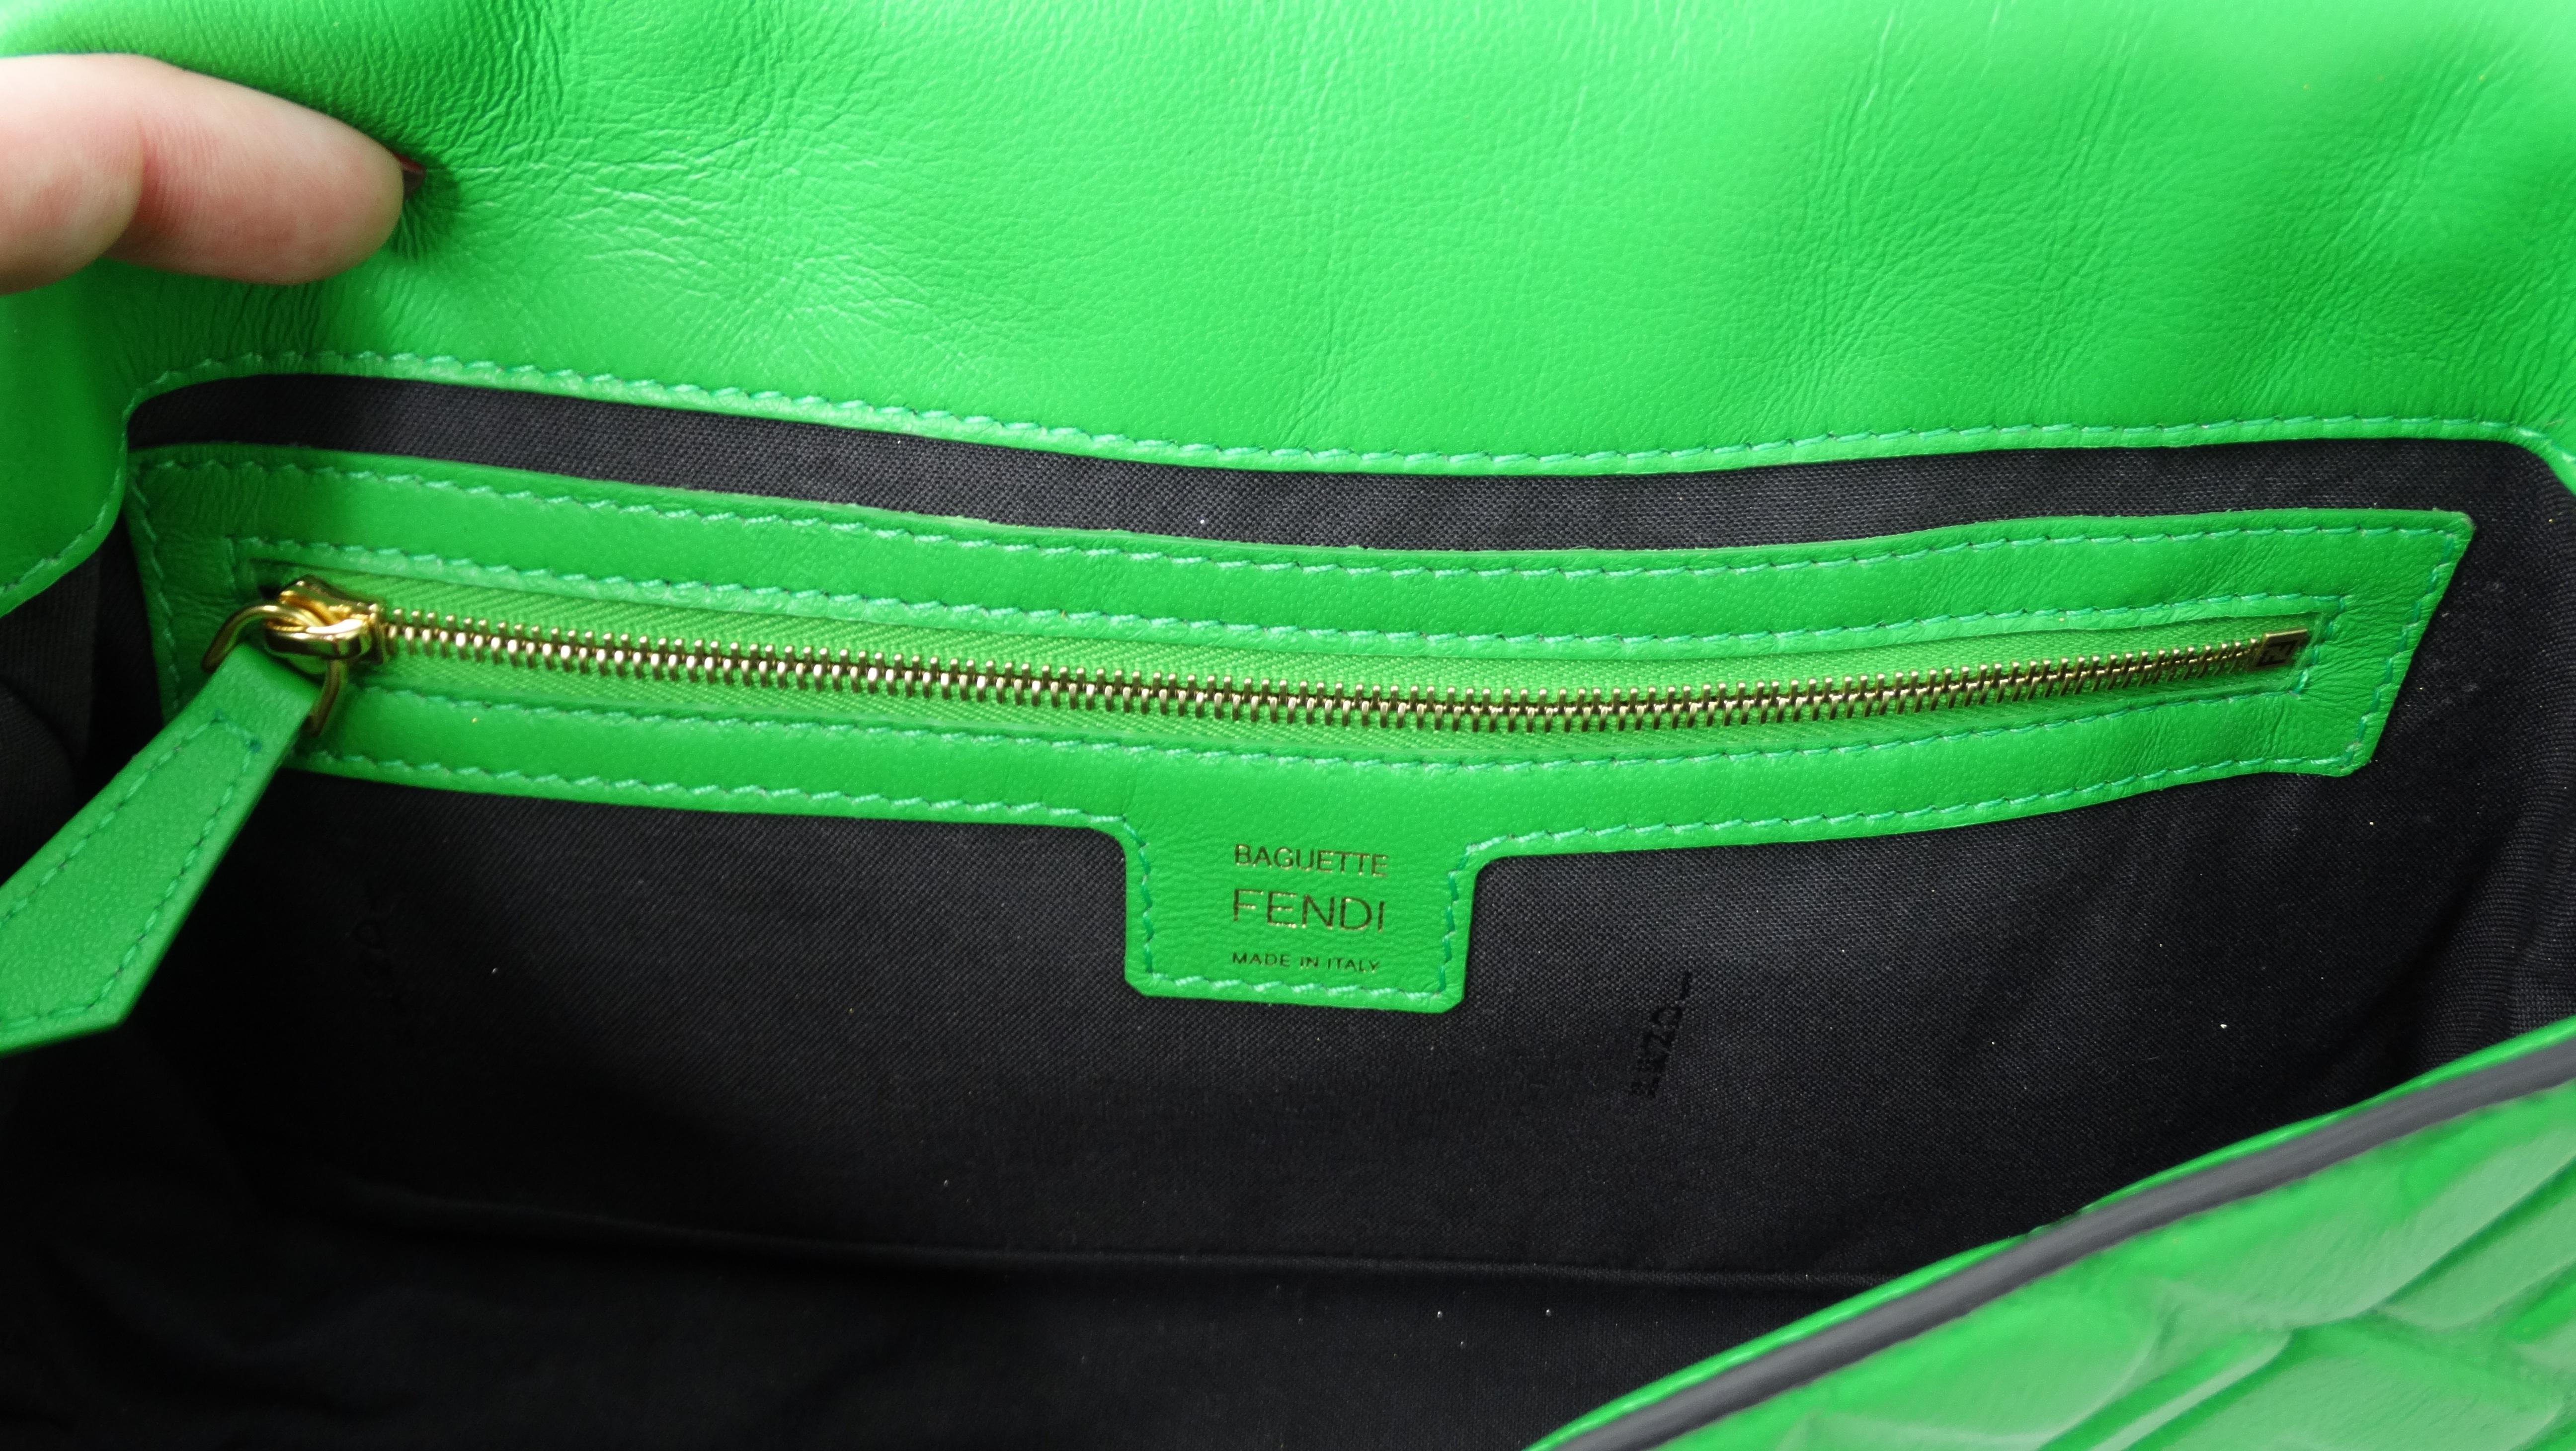 Fendi Baguette Green Nappa Leather Bag 6